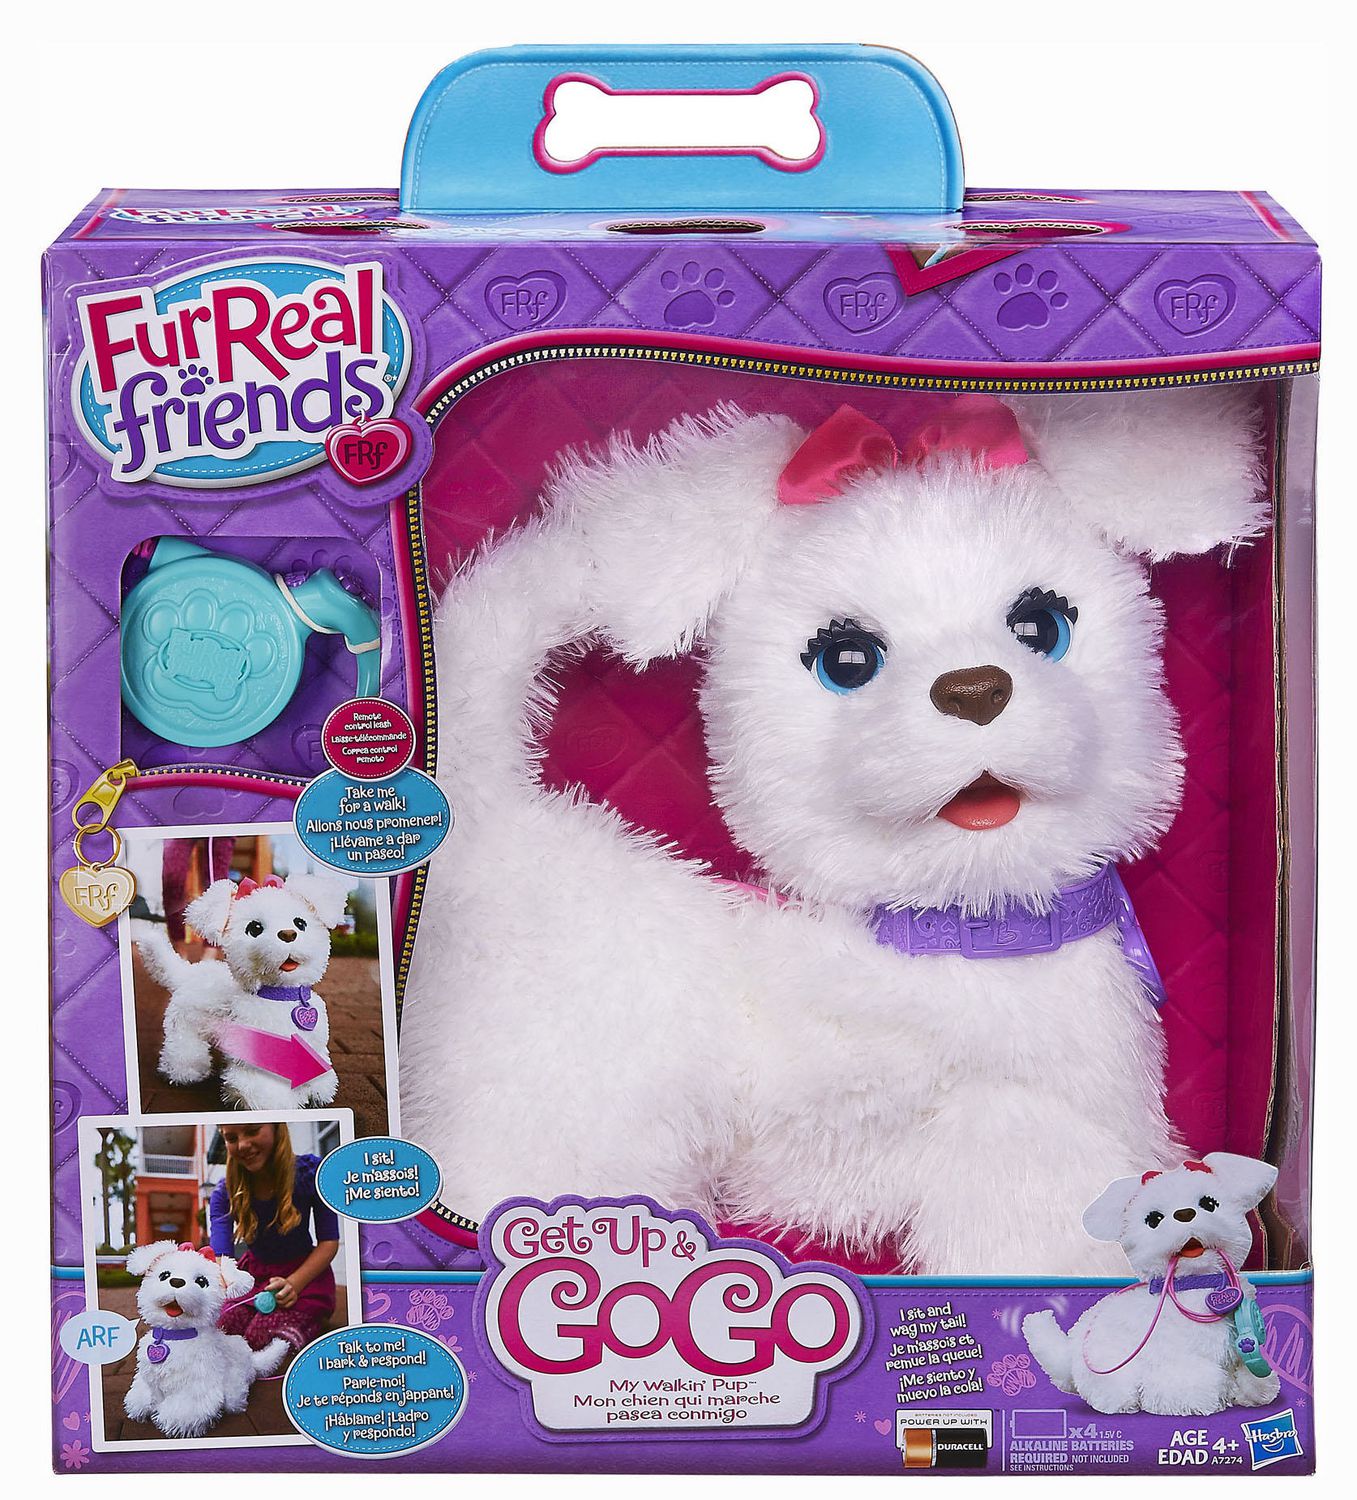 FurReal Friends Get up & Gogo My Walkin’ Pup Pet Walmart